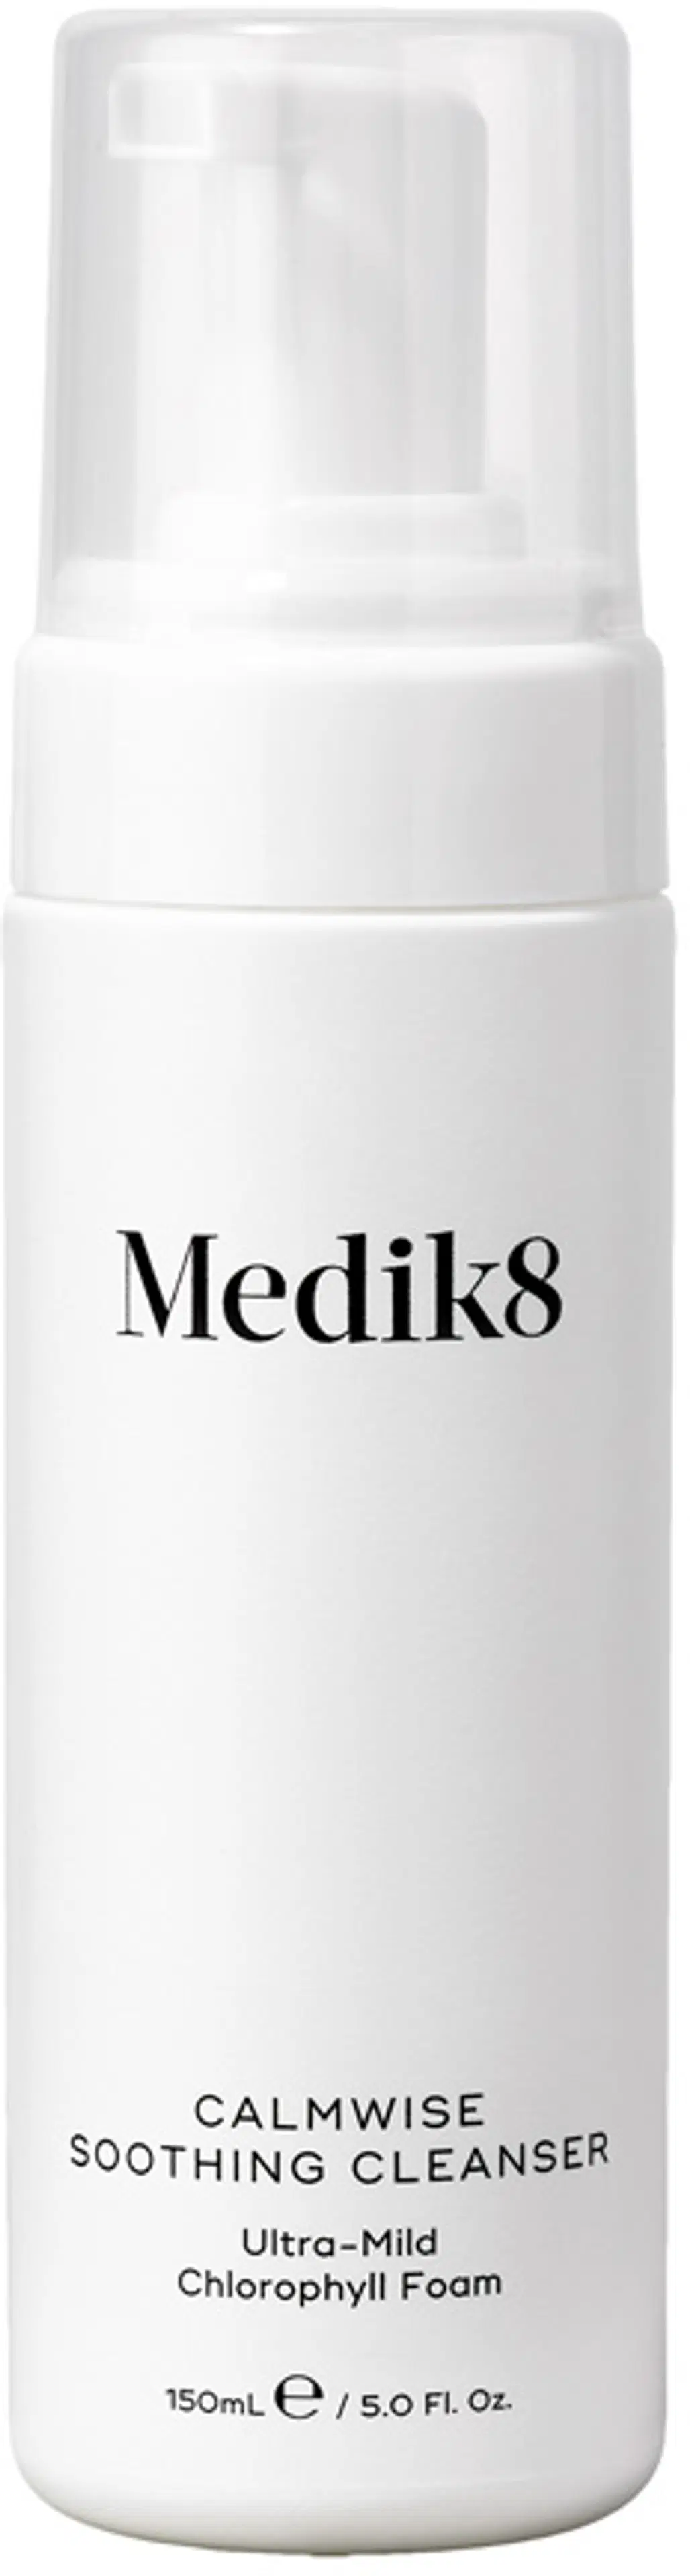 Medik8 Calmwise Soothing Cleanser puhdistusvaahto 150 ml